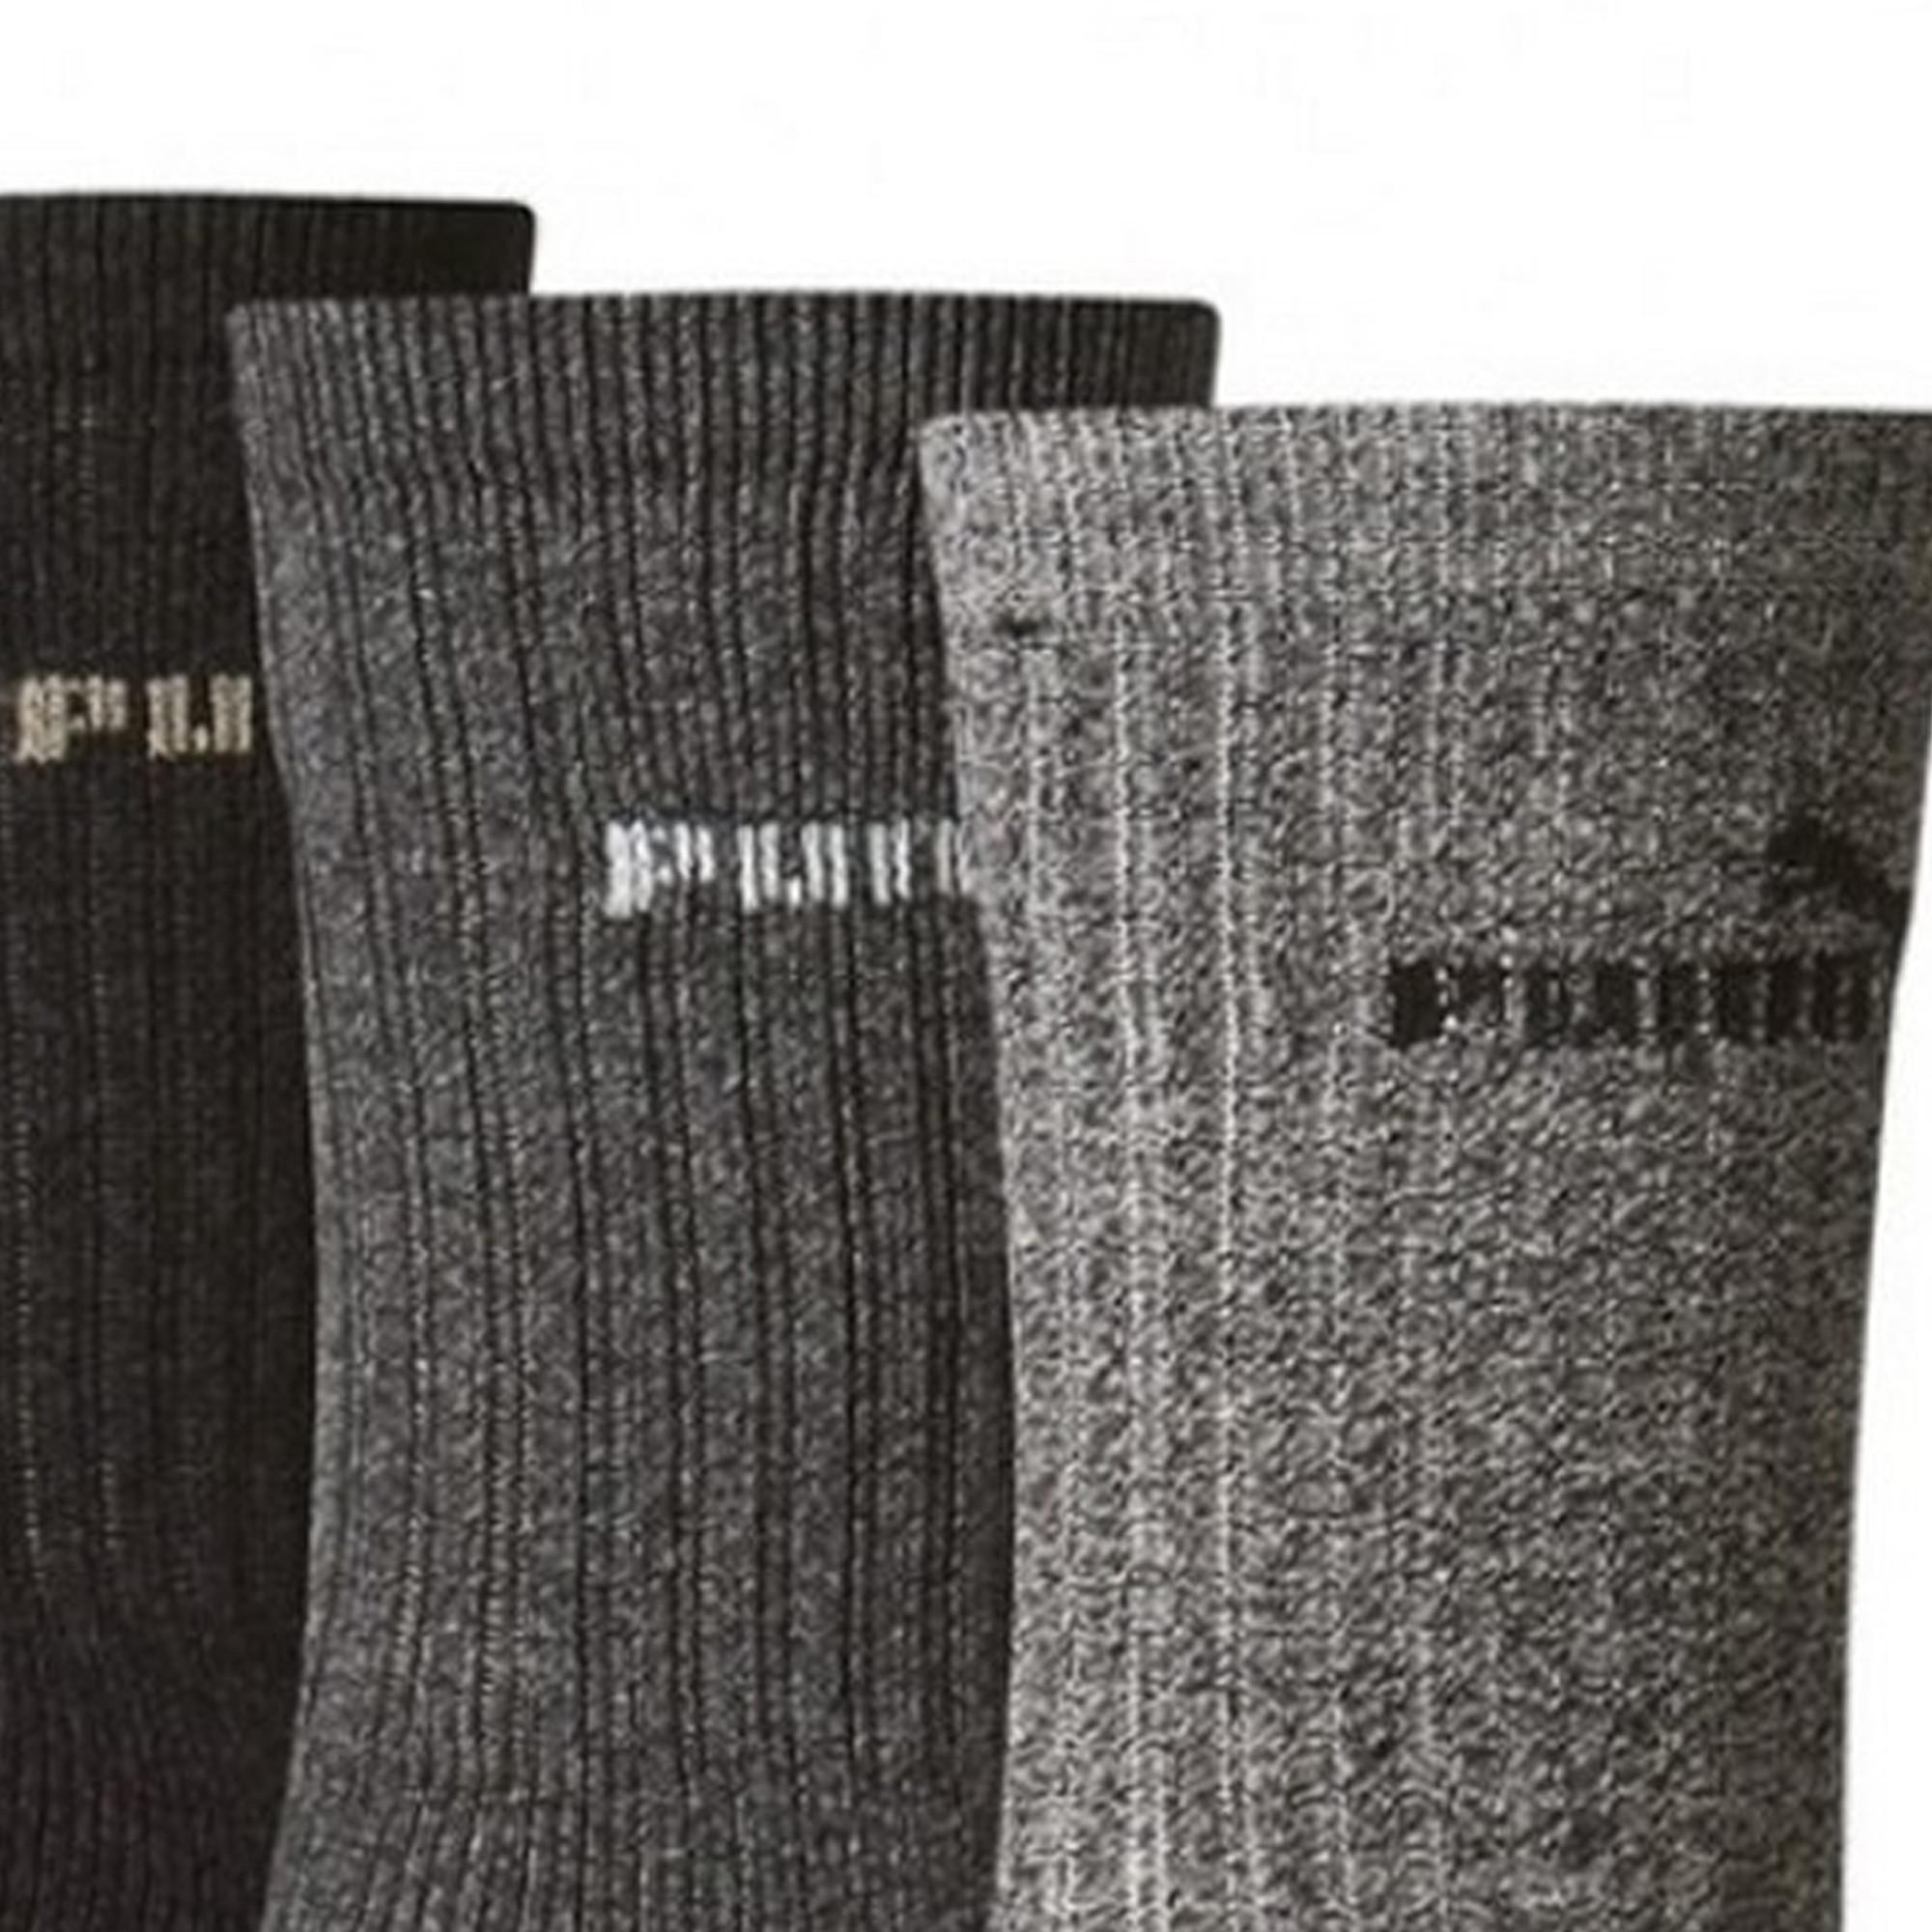 PUMA  Socken  (3erPack) 